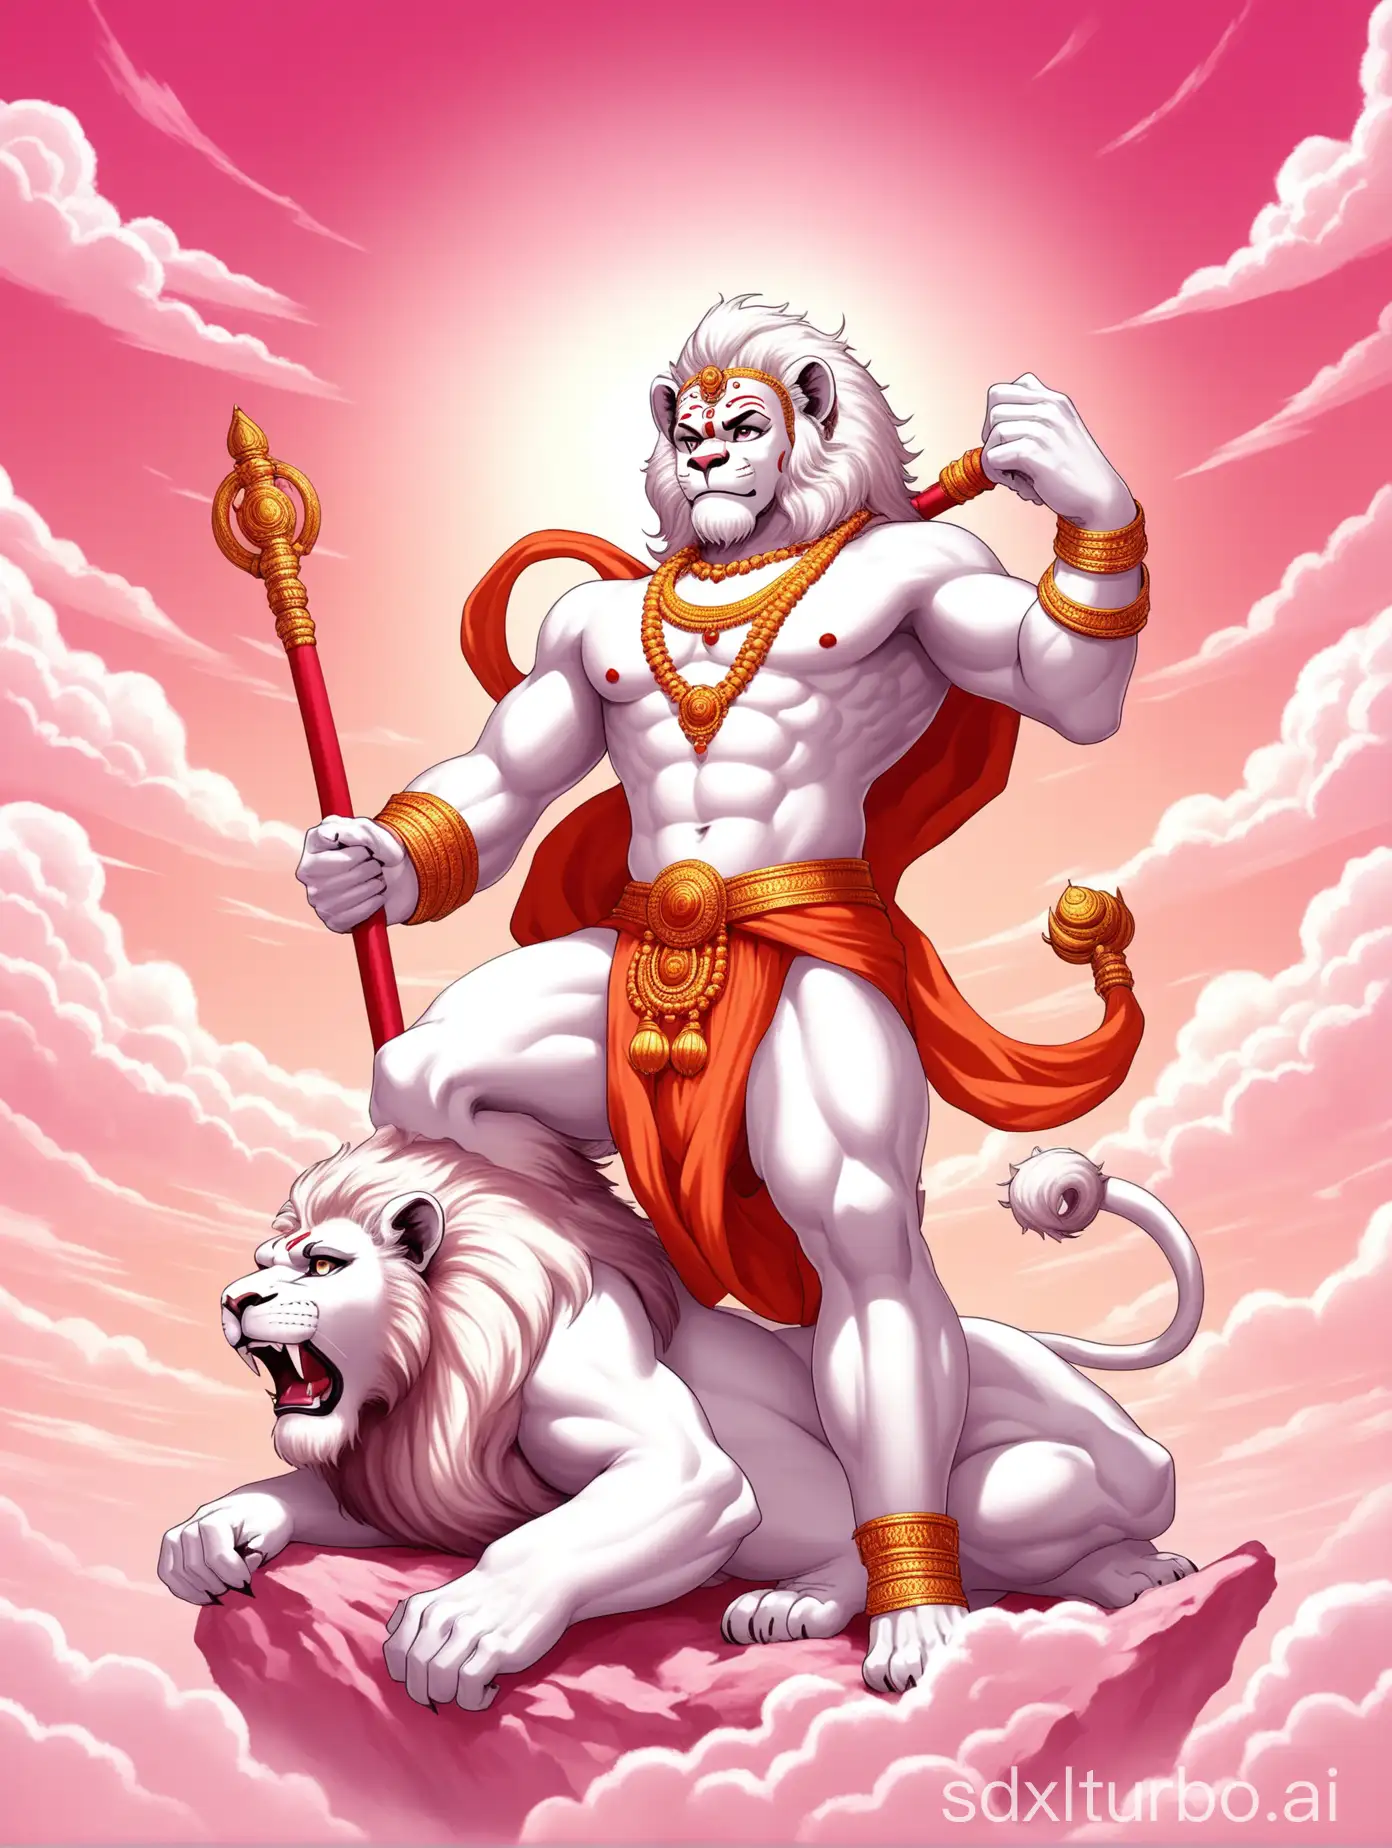 Teen age Hanuman look like a superhero pink sky with white cloud white skin hanuman with the white colour lion 